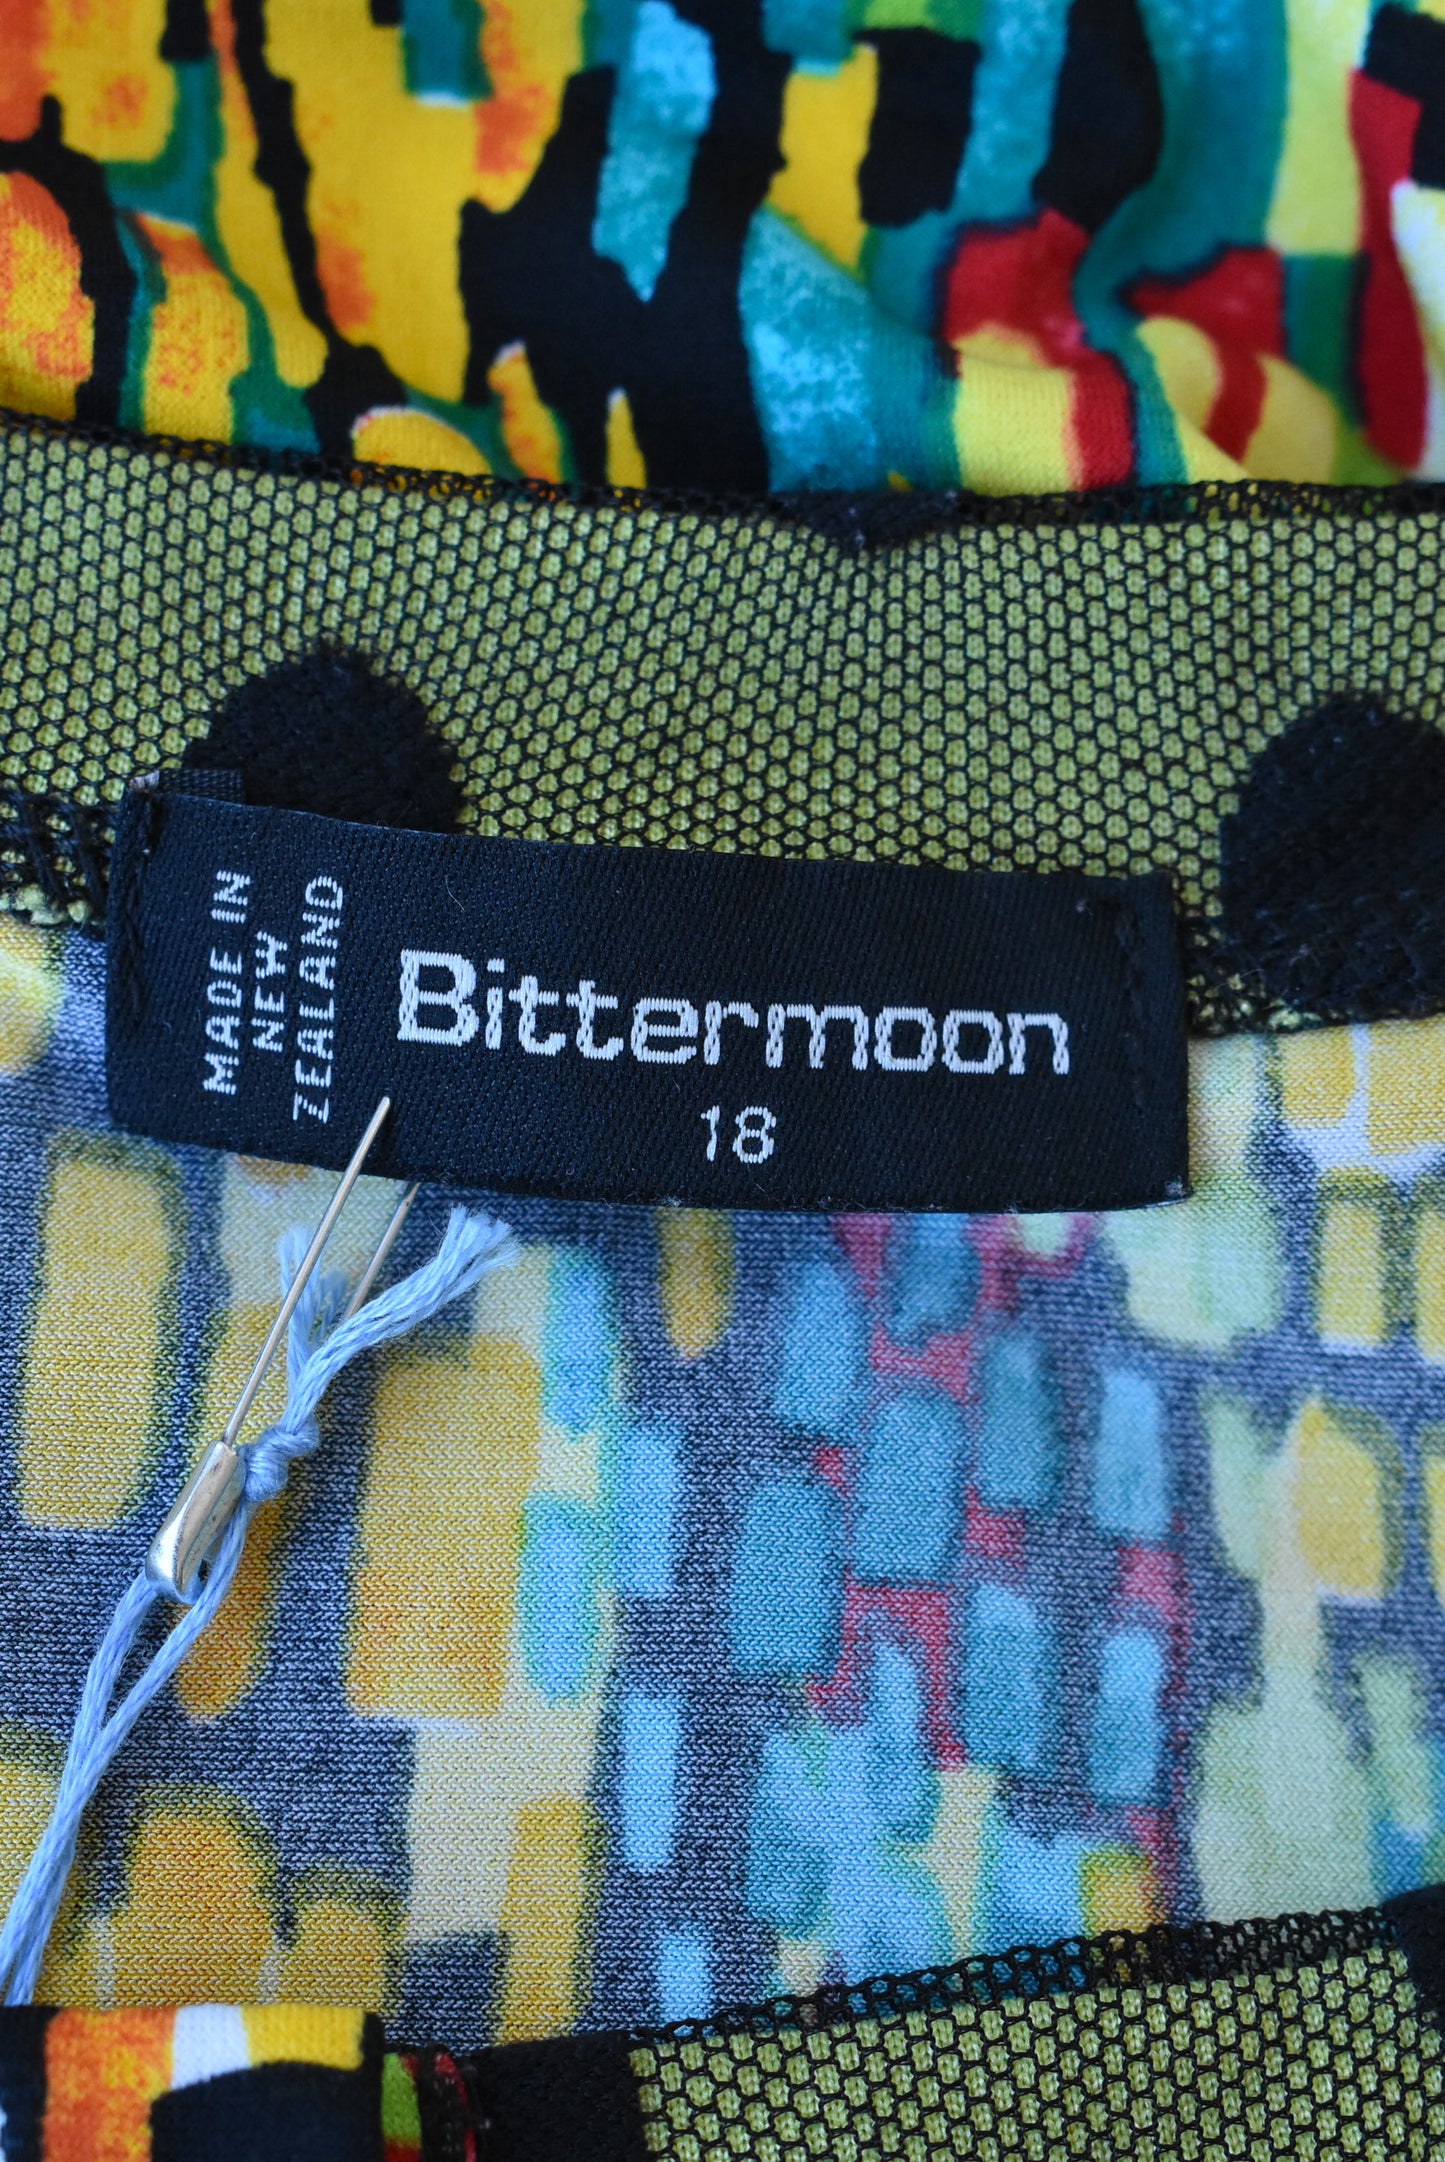 Bittermoon many-coloured fun shirt, size 18